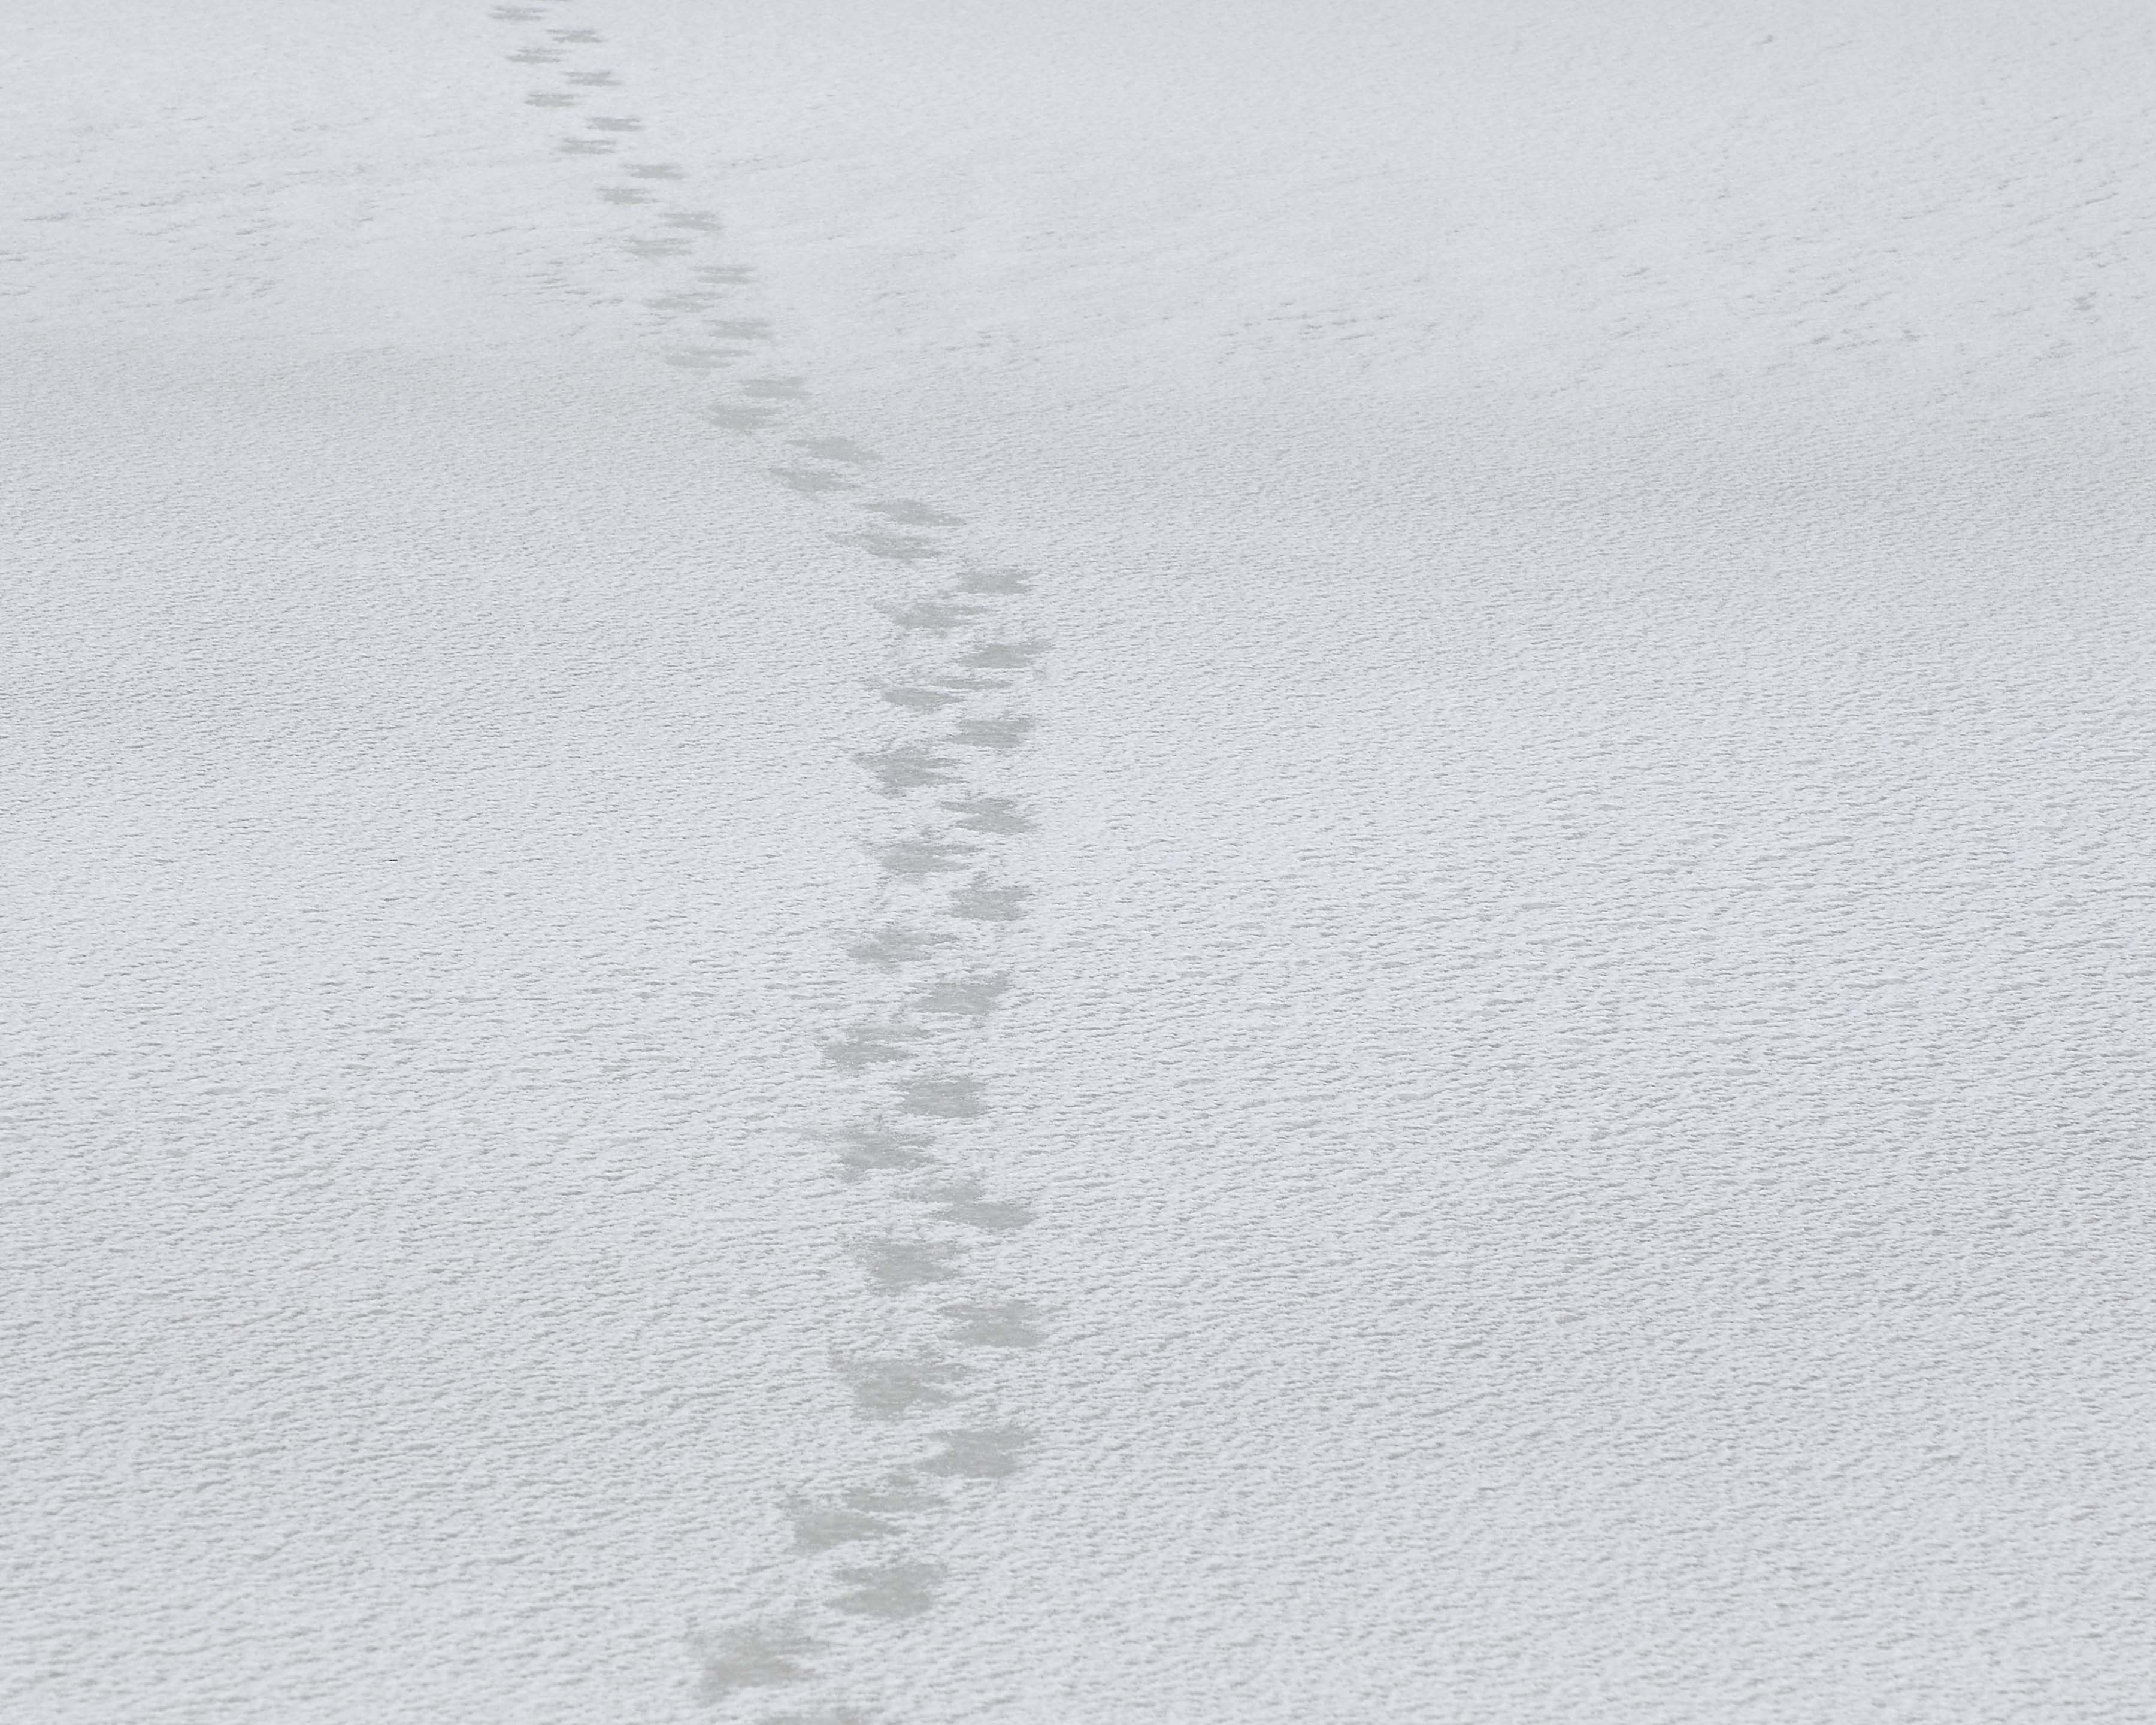 Bear, Polar, Prints in Snow-110507-Churchill Wildlife Mgmt Area, Manitoba, Canada-#0719.jpg